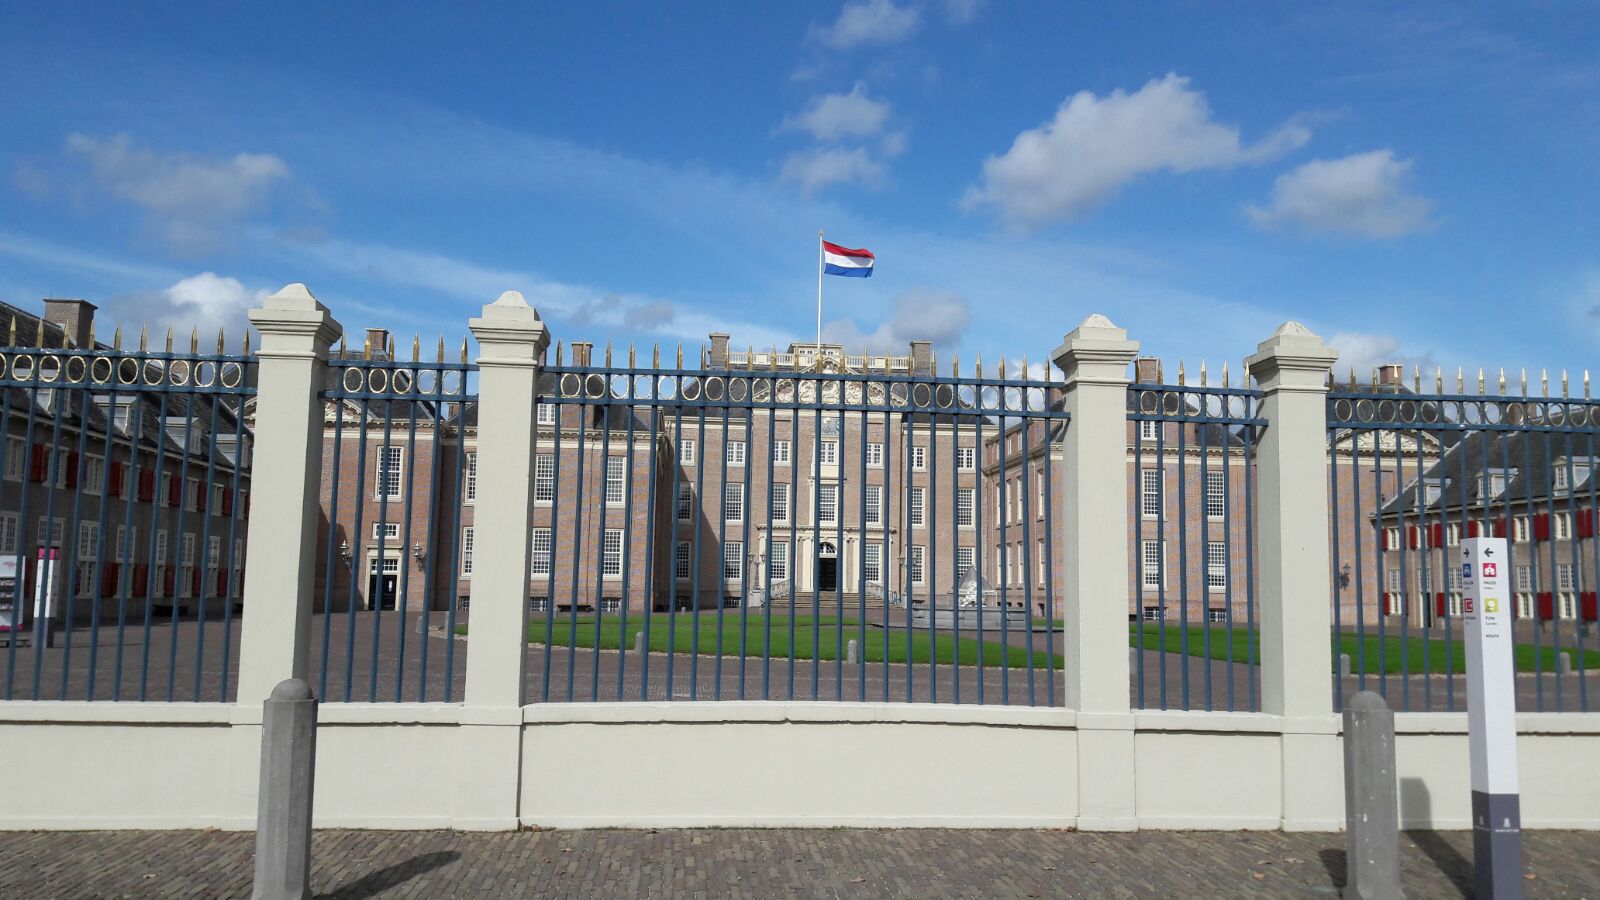 Palau reial barroc Het Loo en Apeldoorn 4